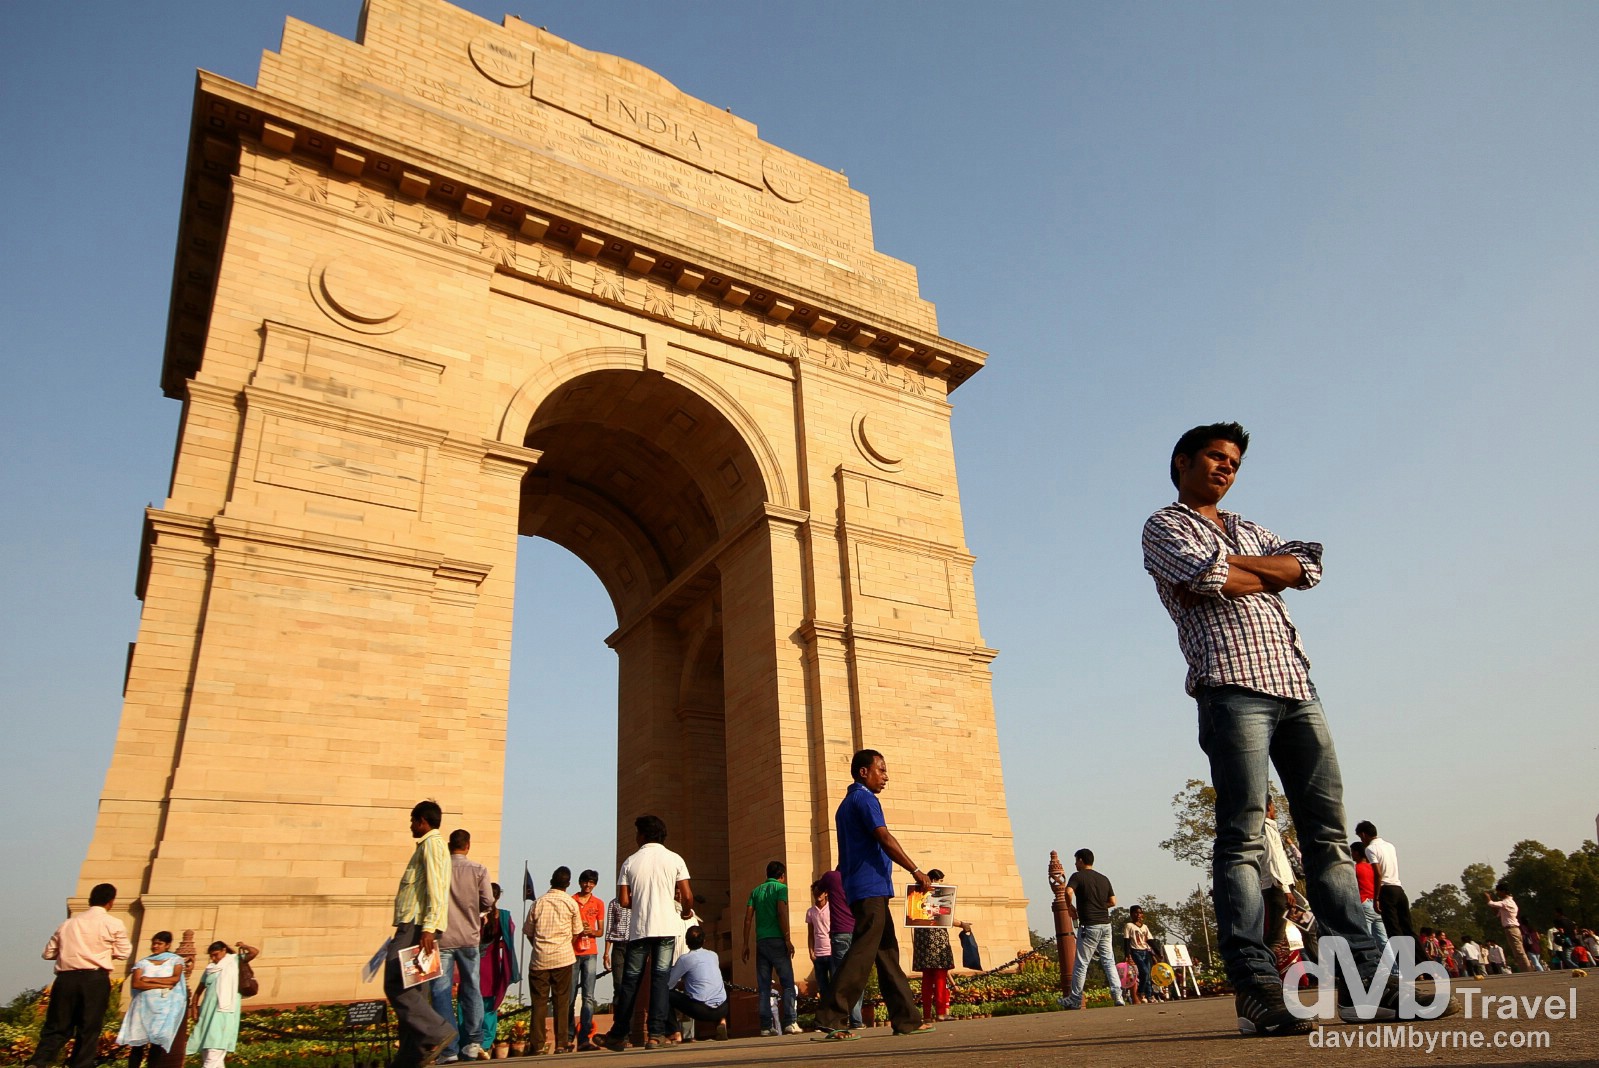 Posing at the India Gate, New Delhi, India. October 7th 2012.